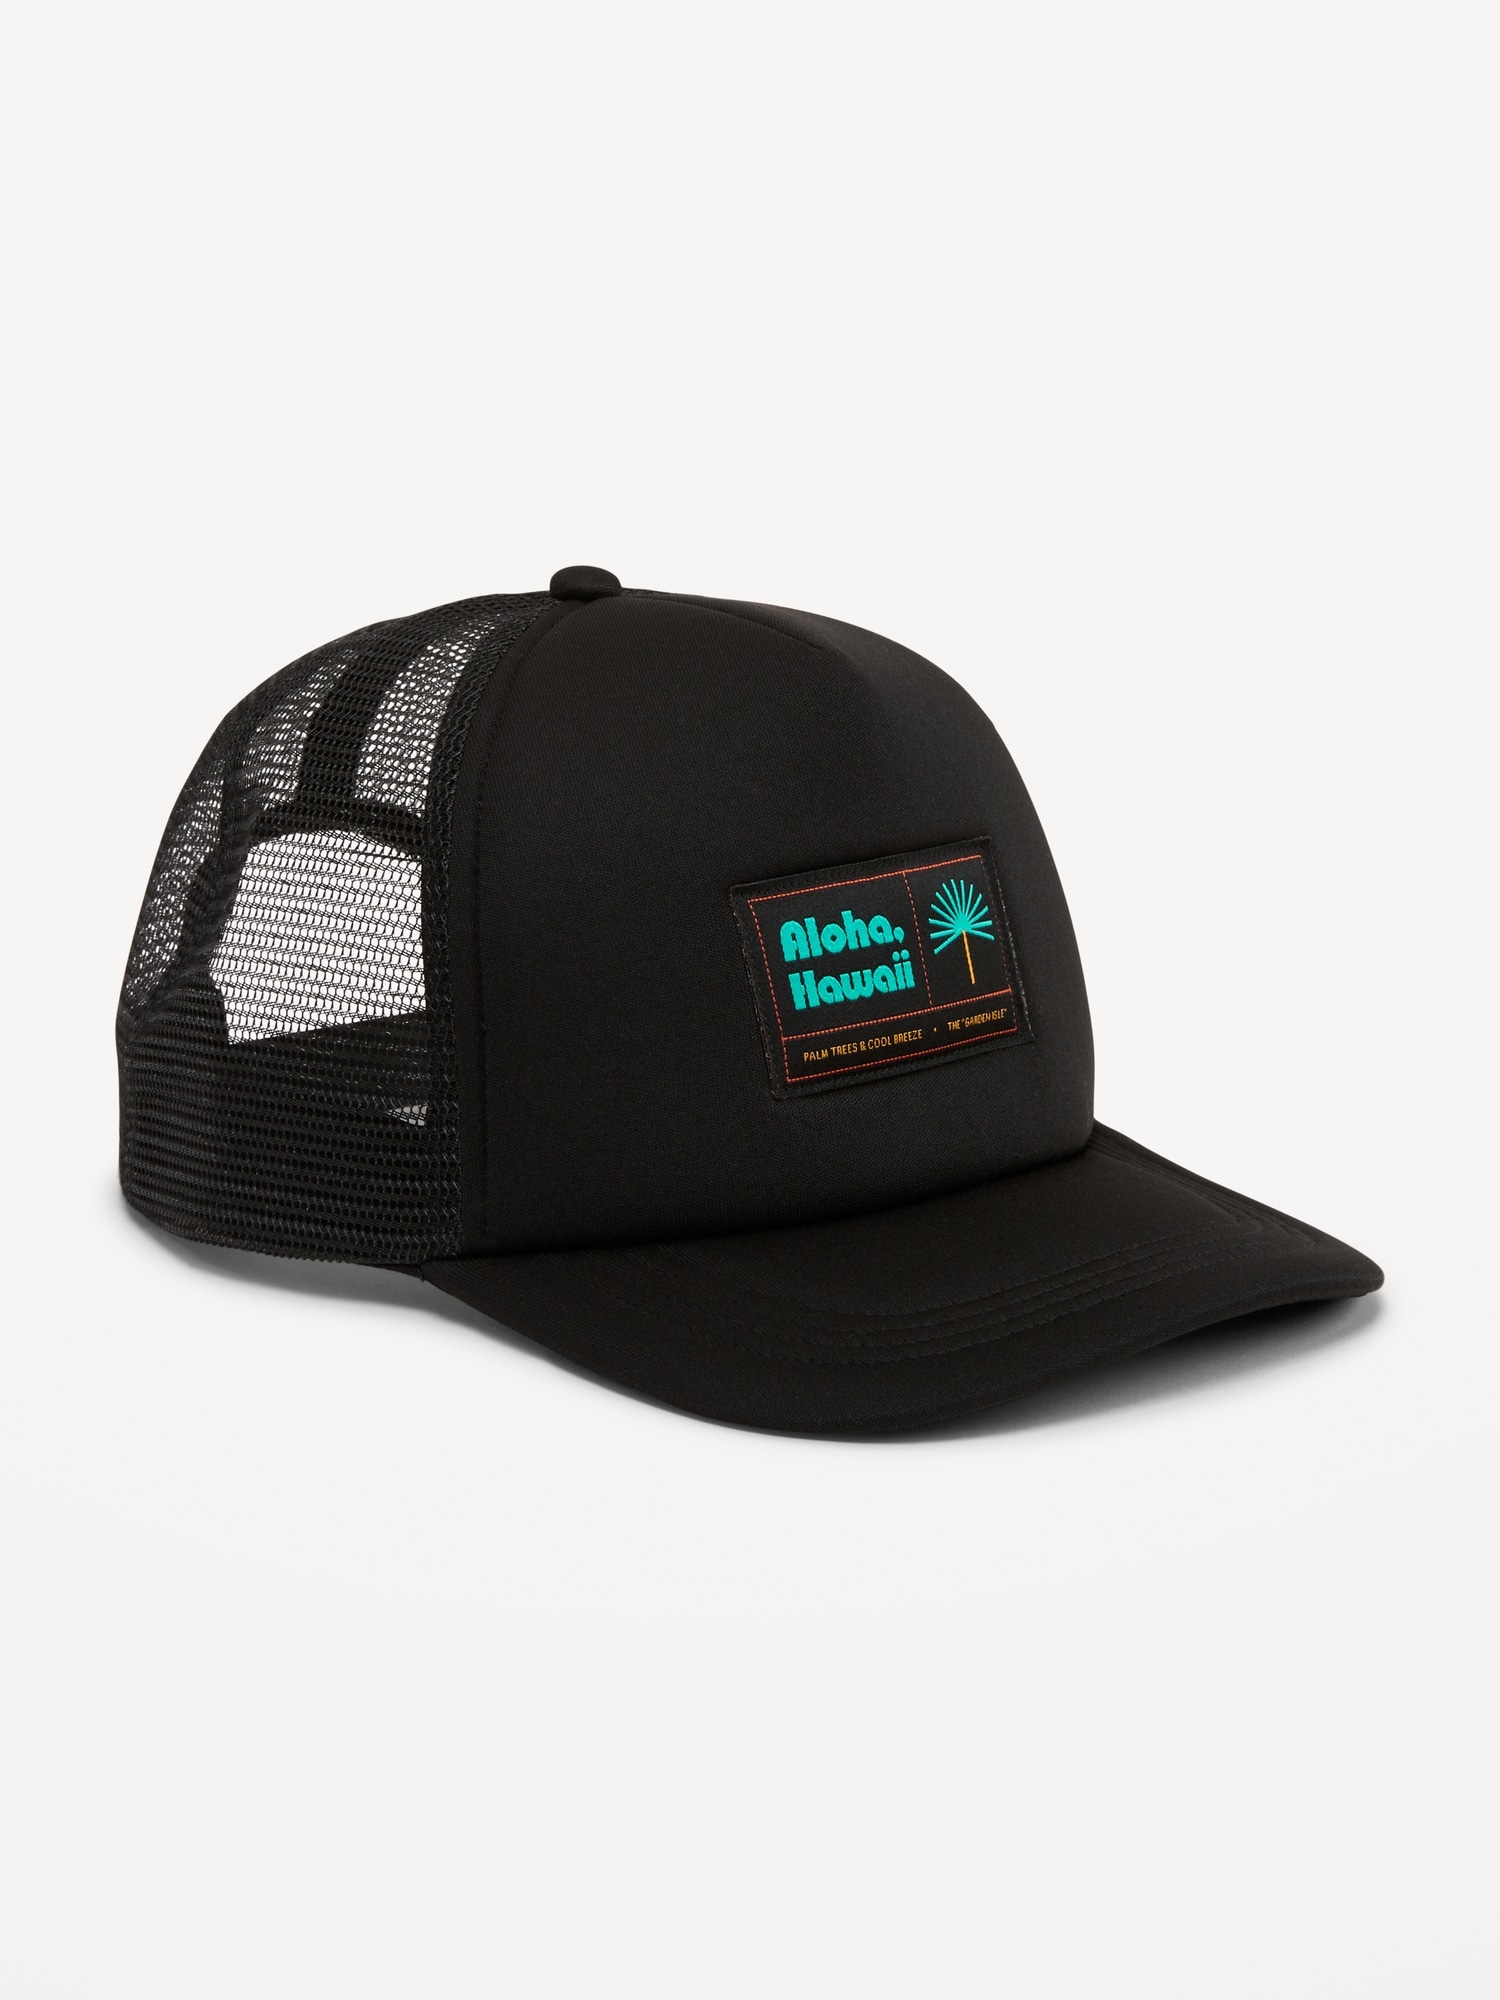 Old Navy Graphic Trucker Hat for Men black. 1